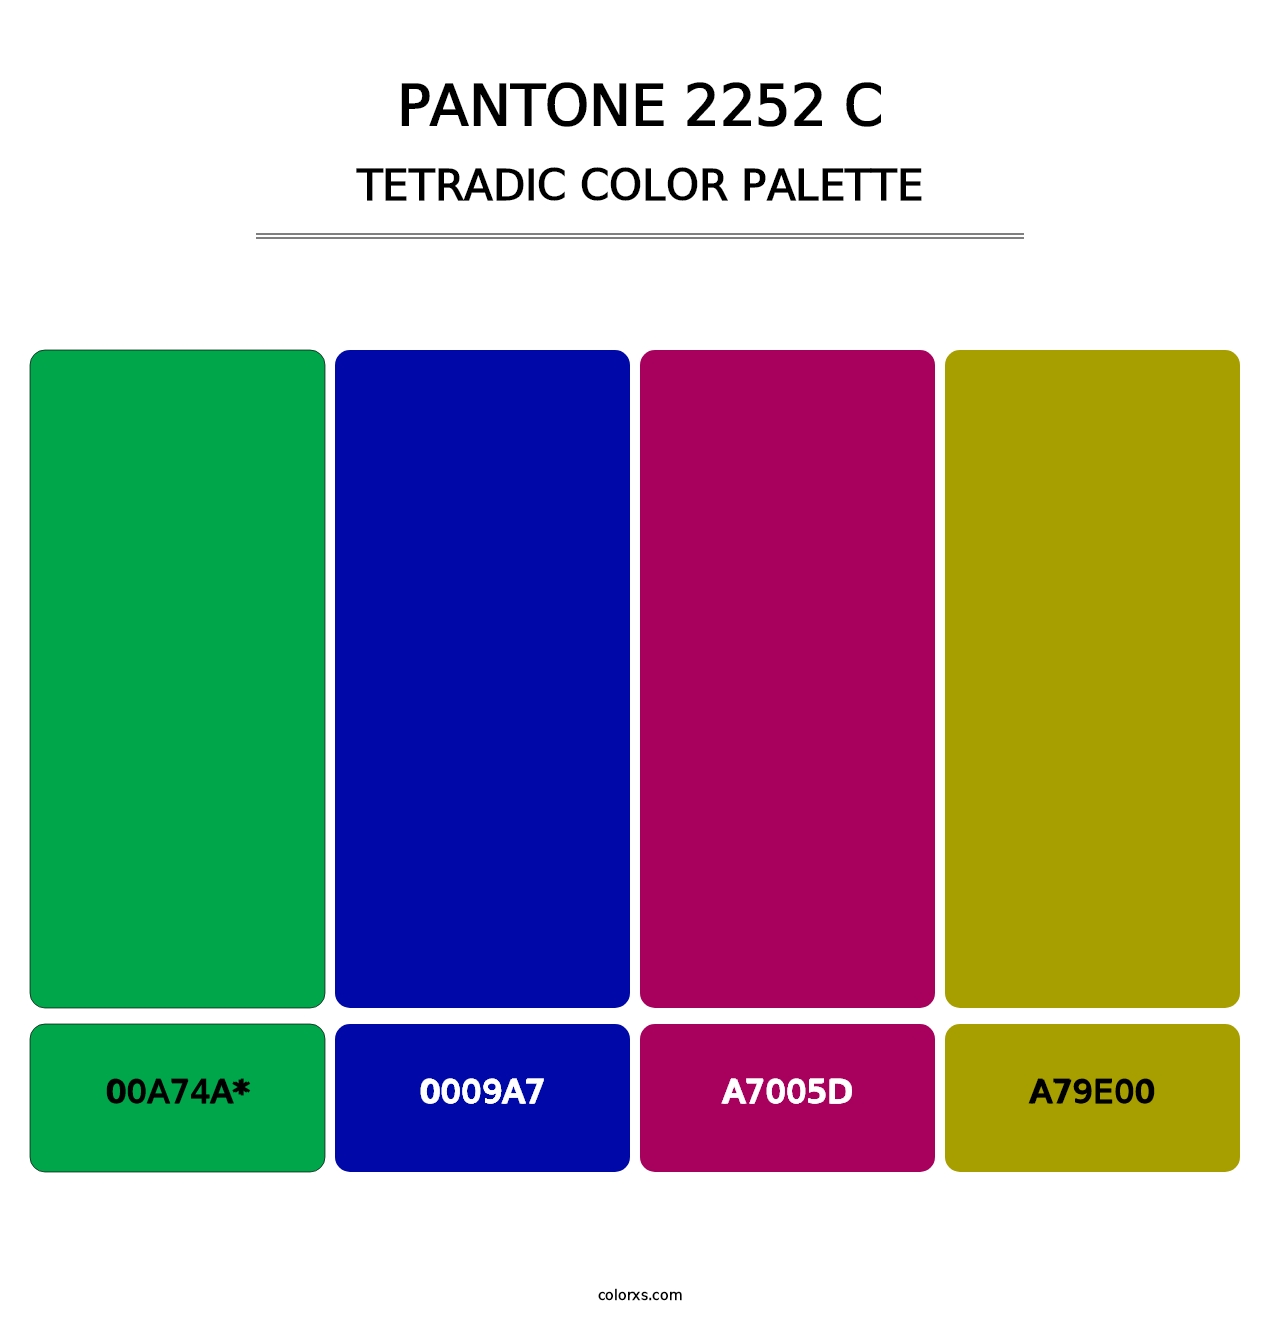 PANTONE 2252 C - Tetradic Color Palette